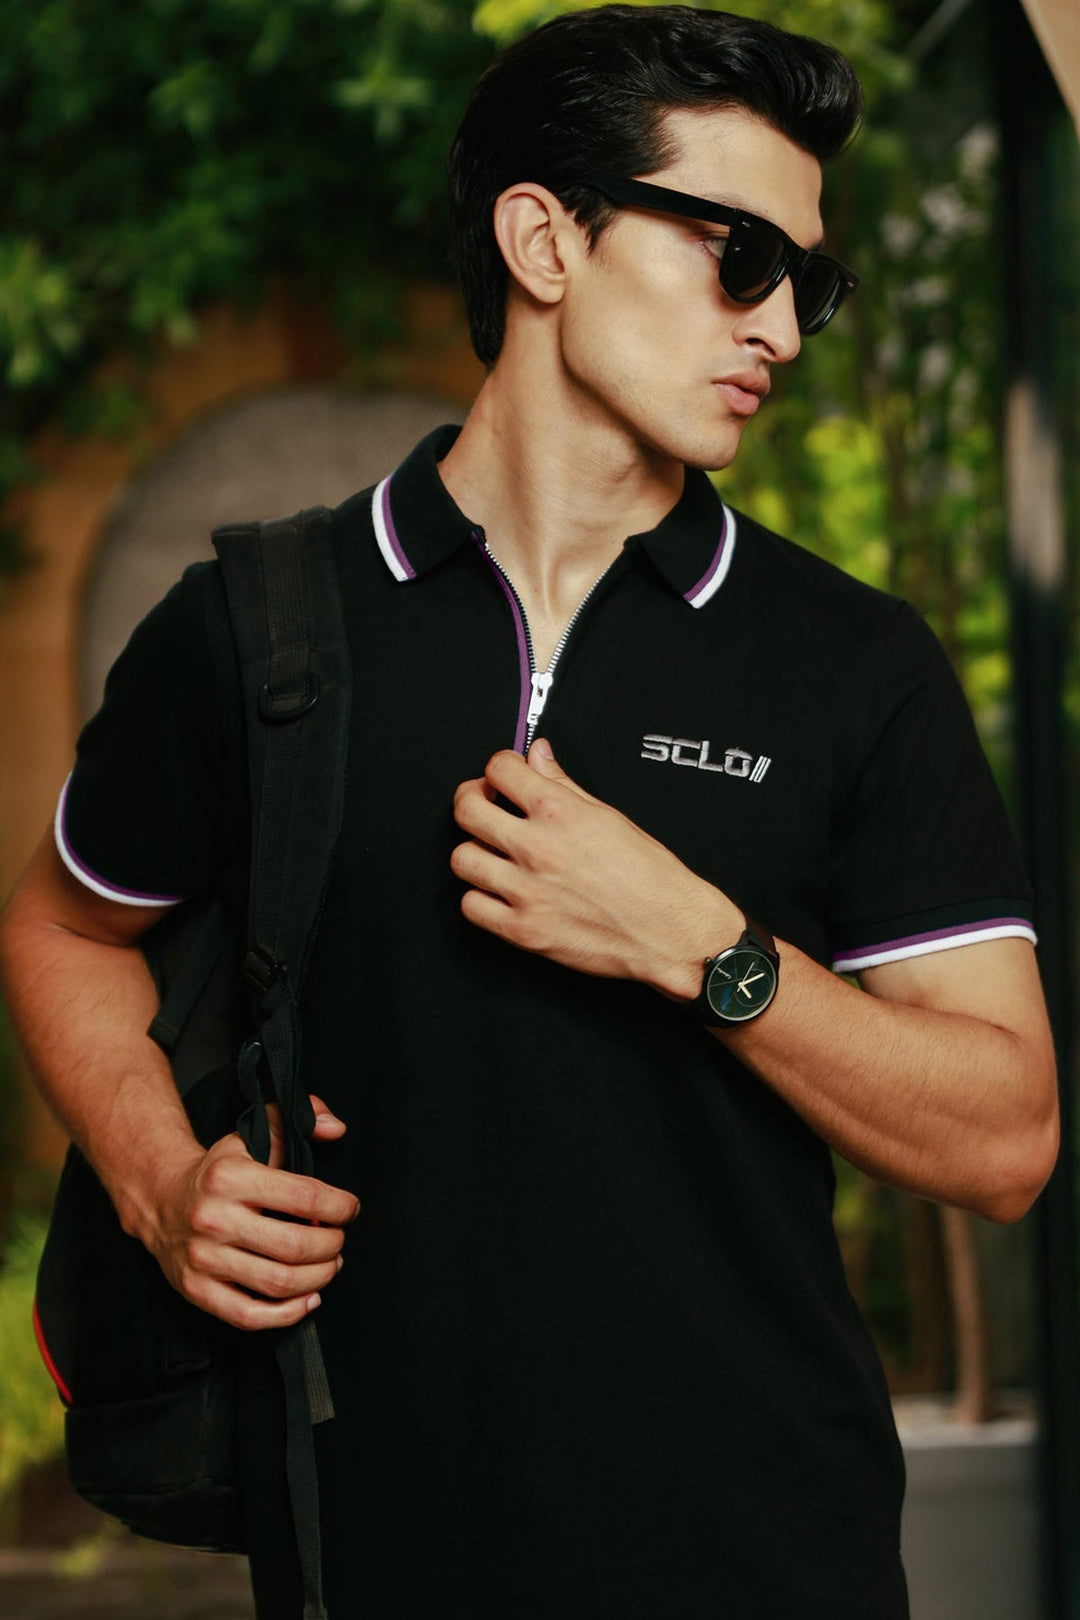 Black Zip-Up Neckline Polo Shirt